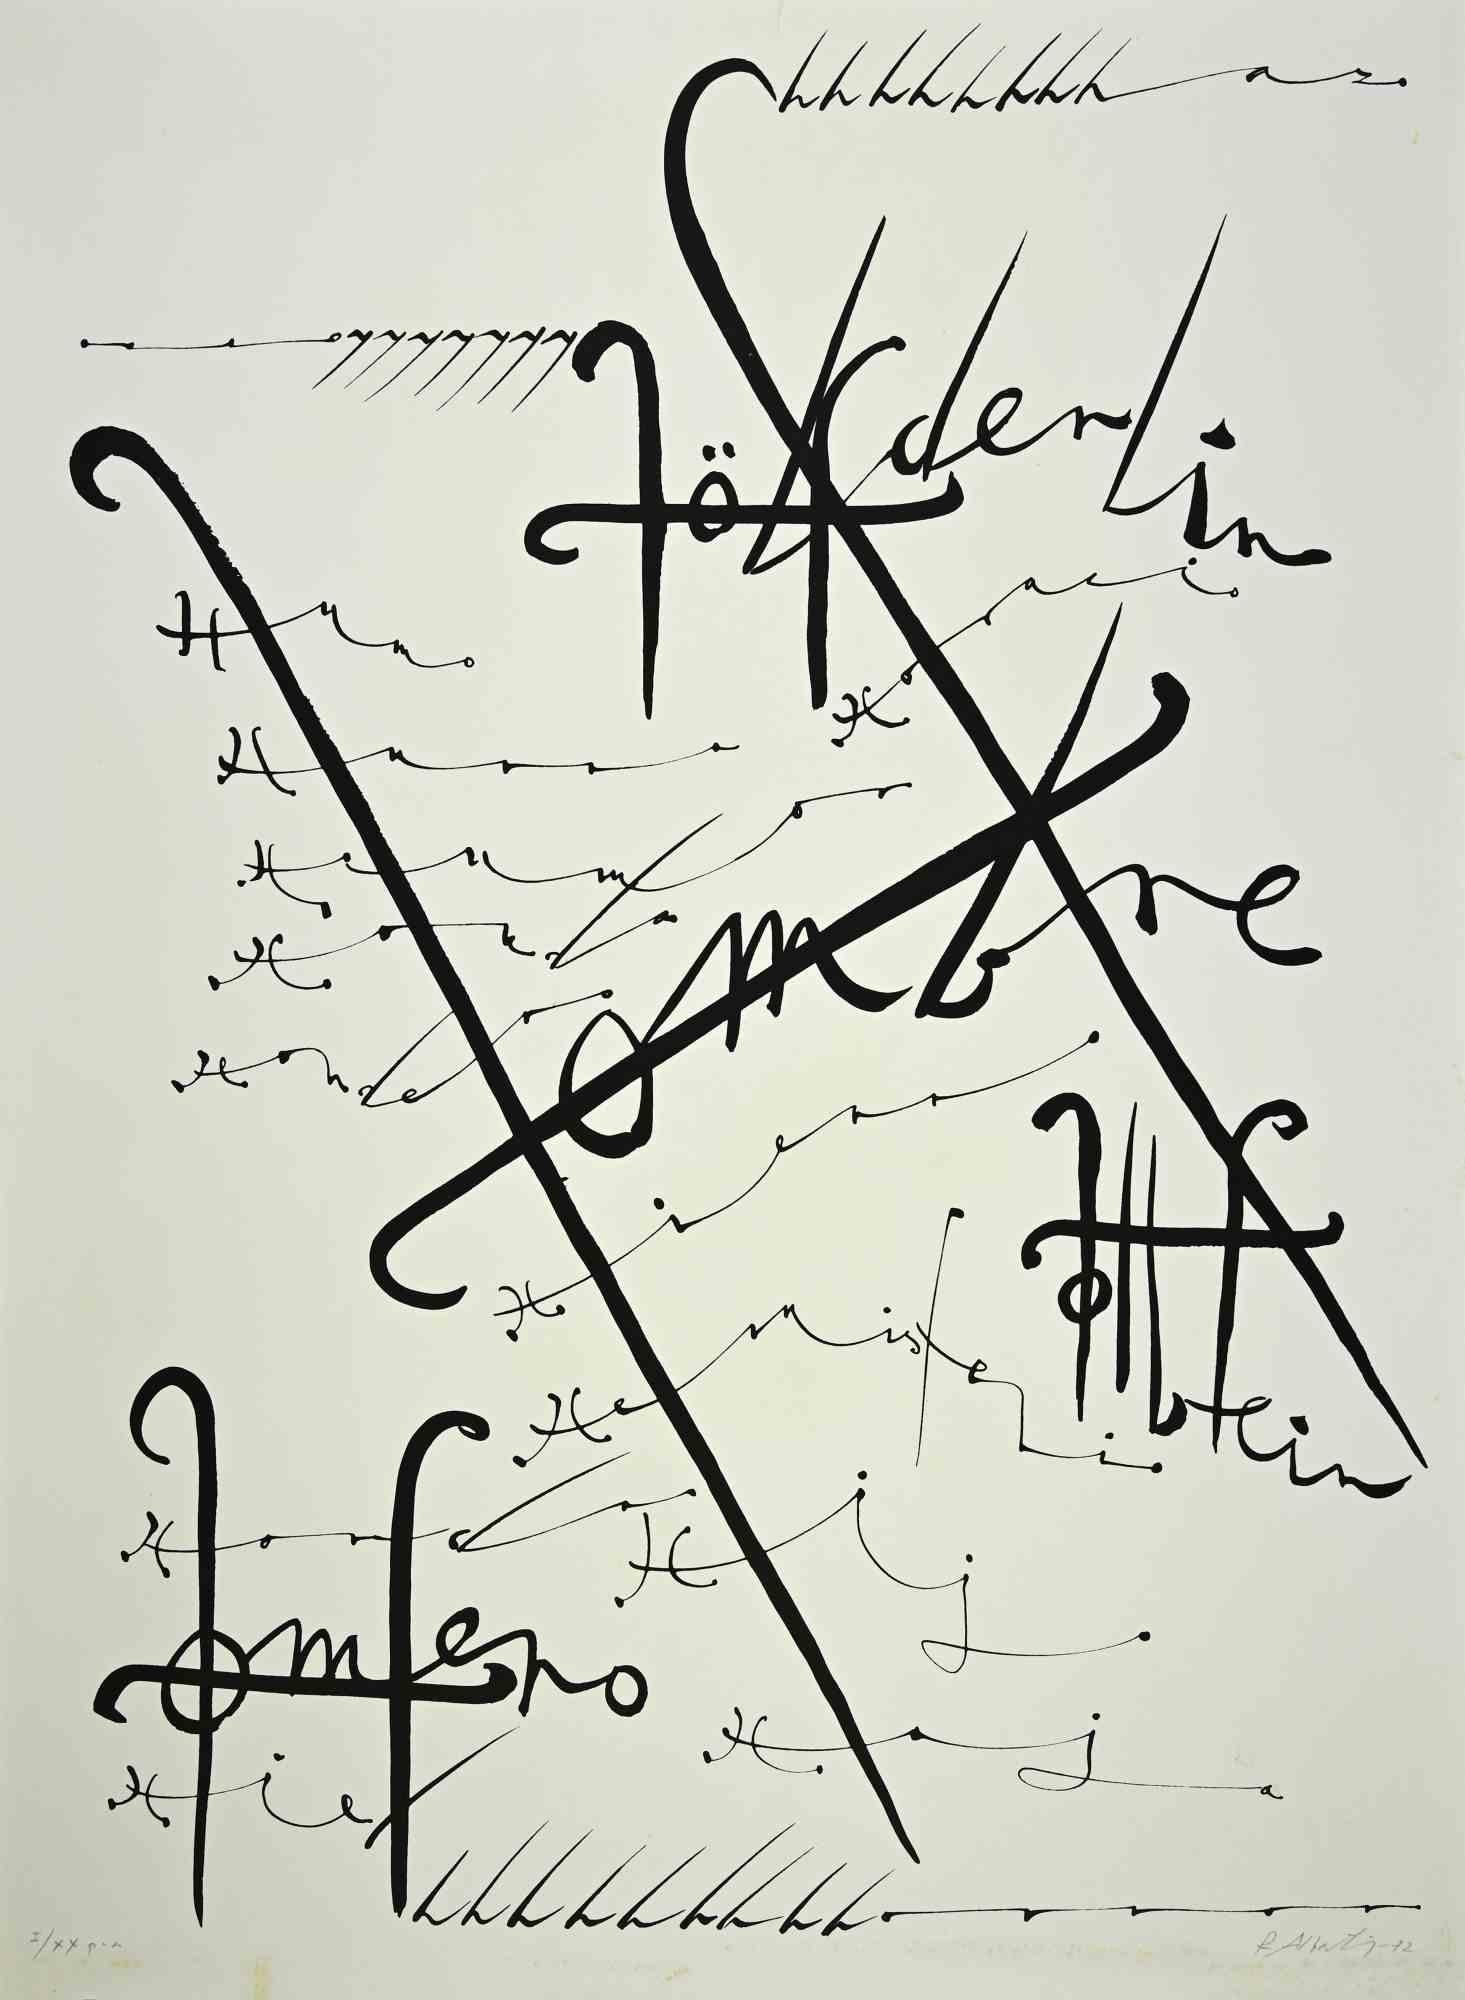 Letter H - Lithograph by Rafael Alberti - 1972